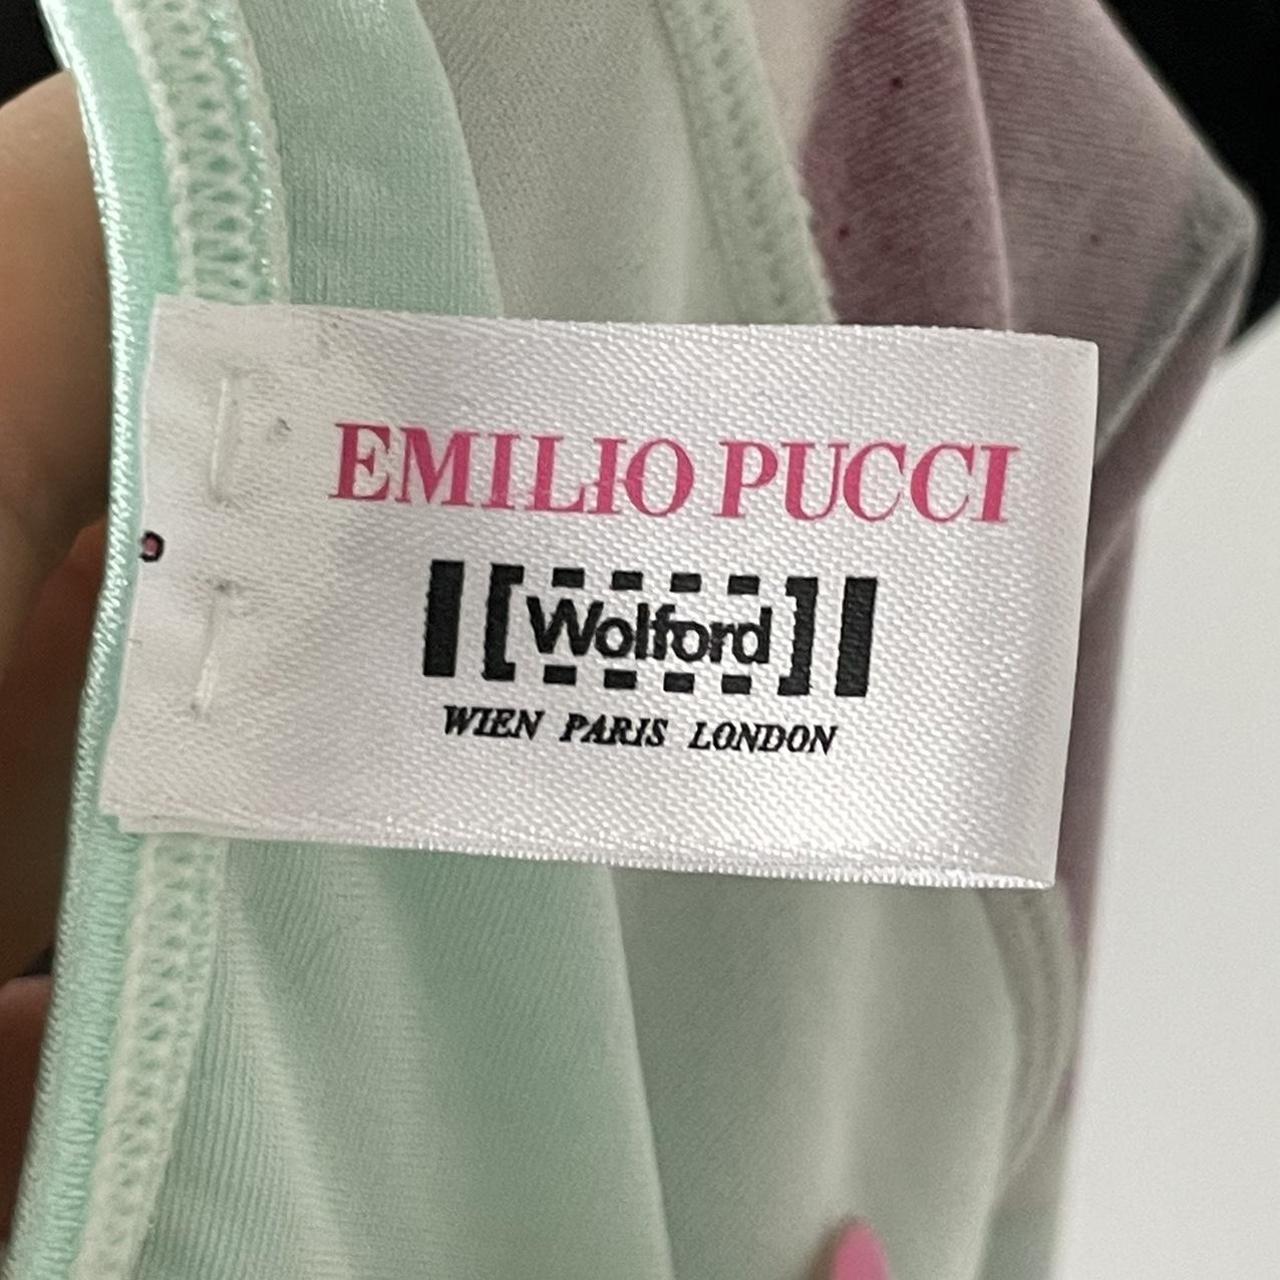 Emilio PUCCI X wolford bodysuit Size M Worn once... - Depop